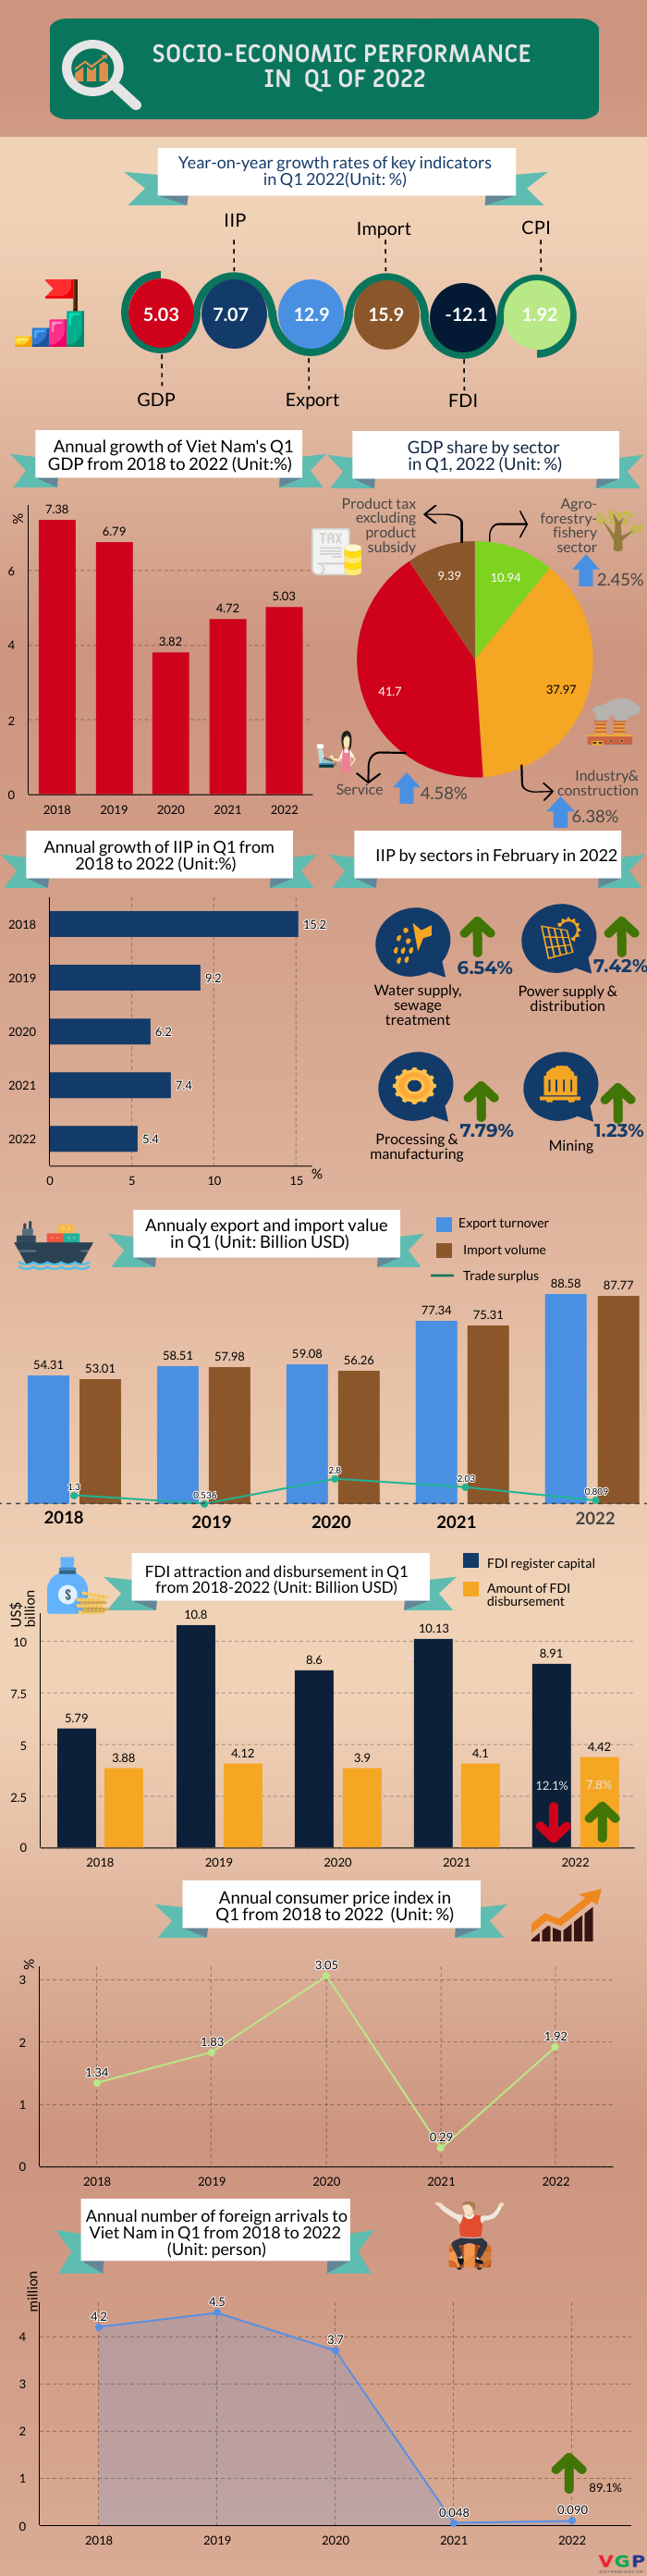 Infographic: Socio-economic performance in Q1 2022 - Ảnh 1.